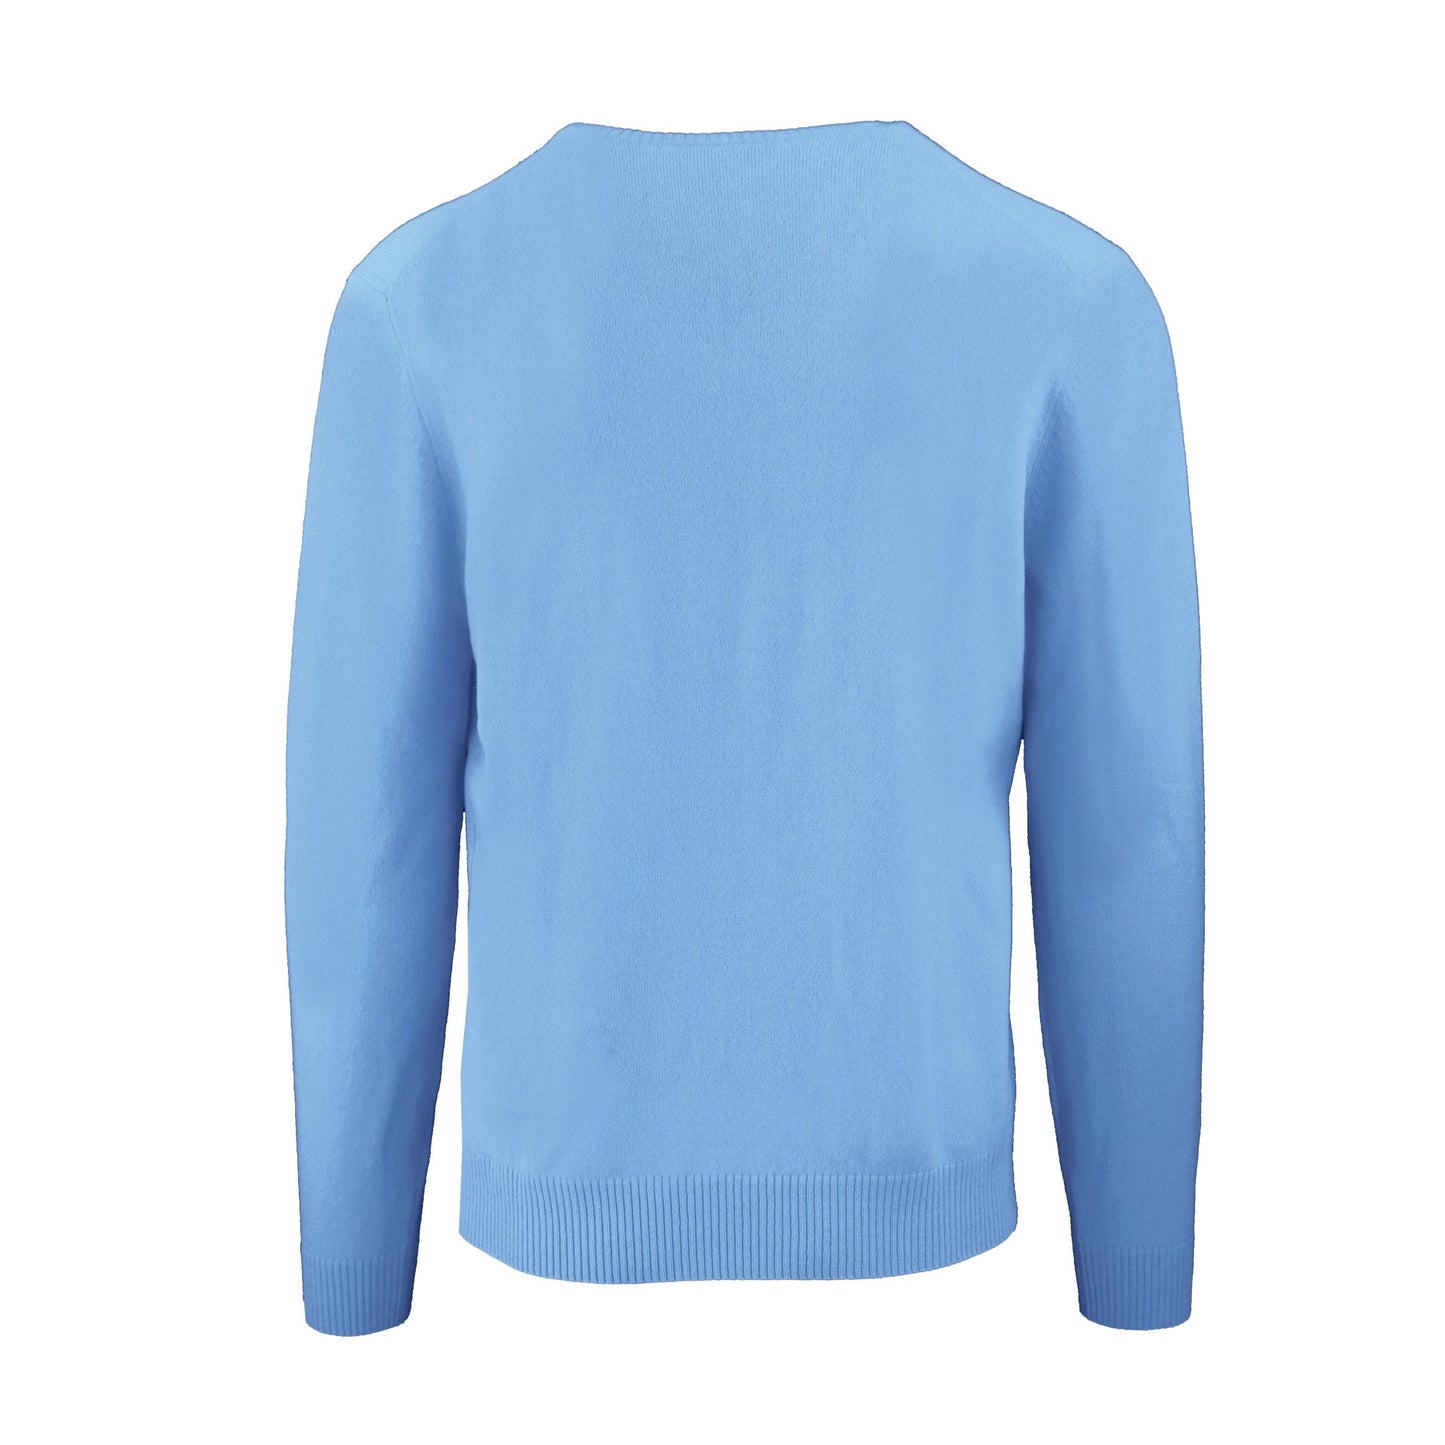 Ice Blue Cashmere Roundneck Sweater